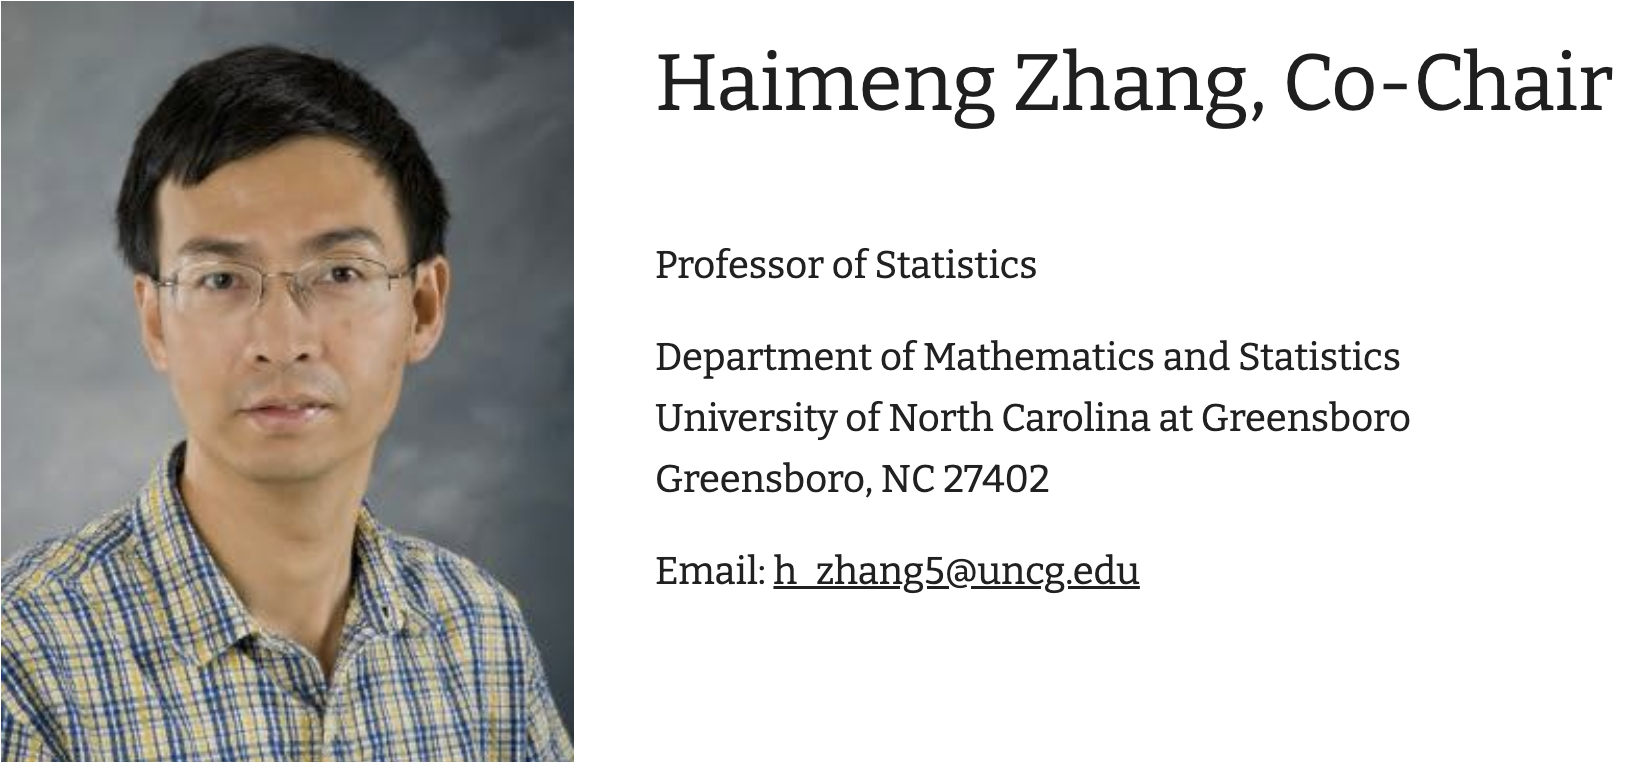 Haimeng Zhang, Co-Chair. Click to email him at h_zhang5@uncg.edu